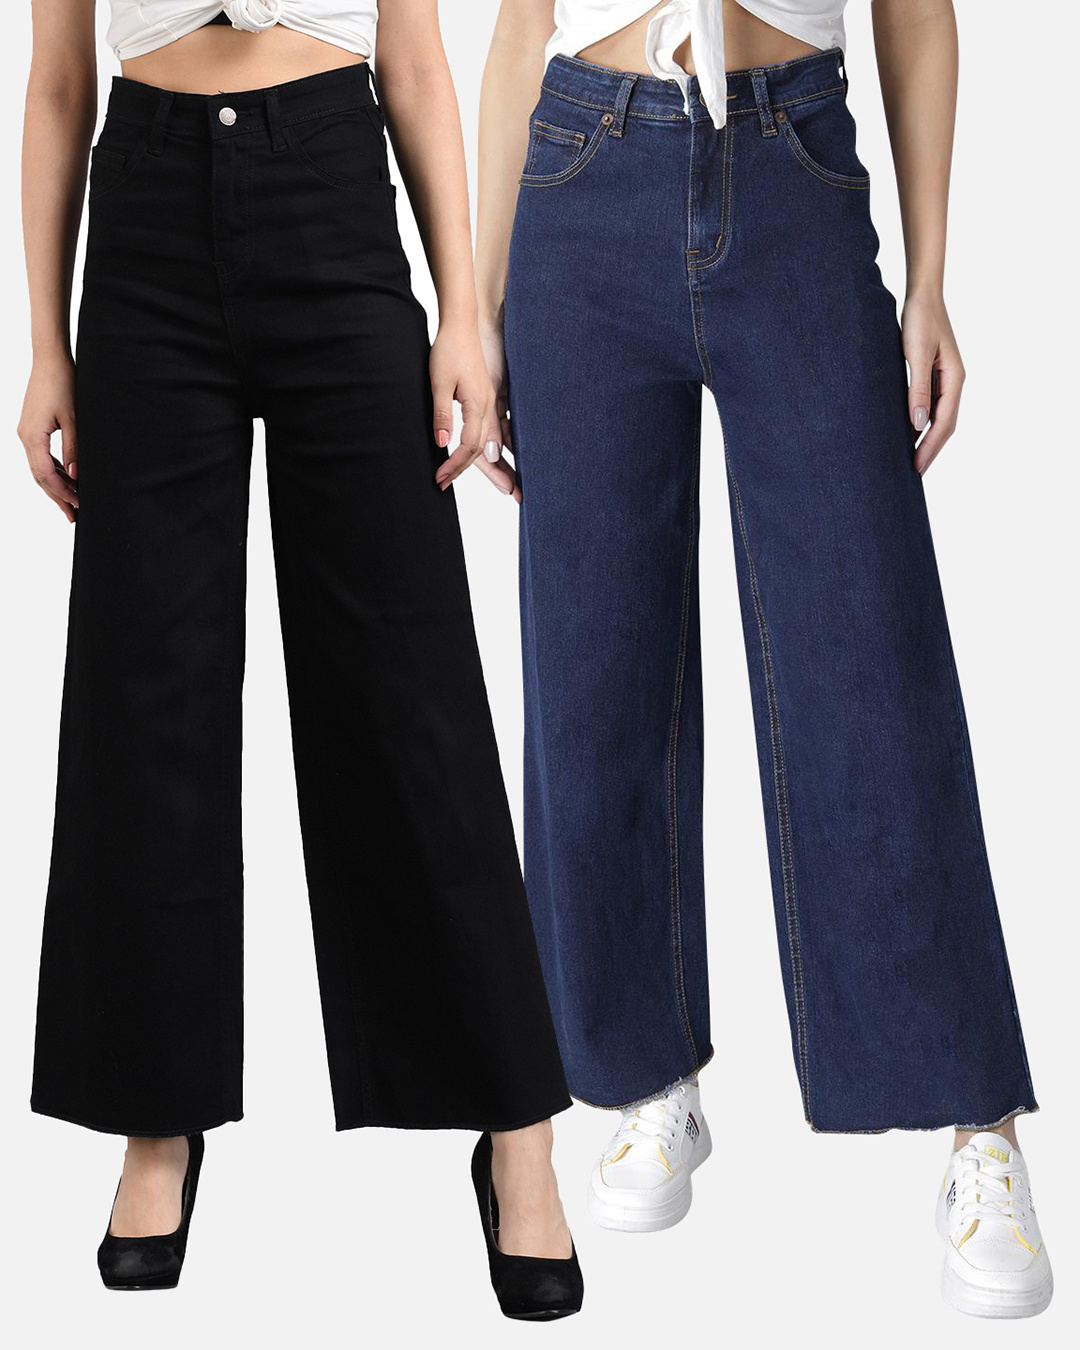 Buy Women's Black Flared Jeans Online at Bewakoof